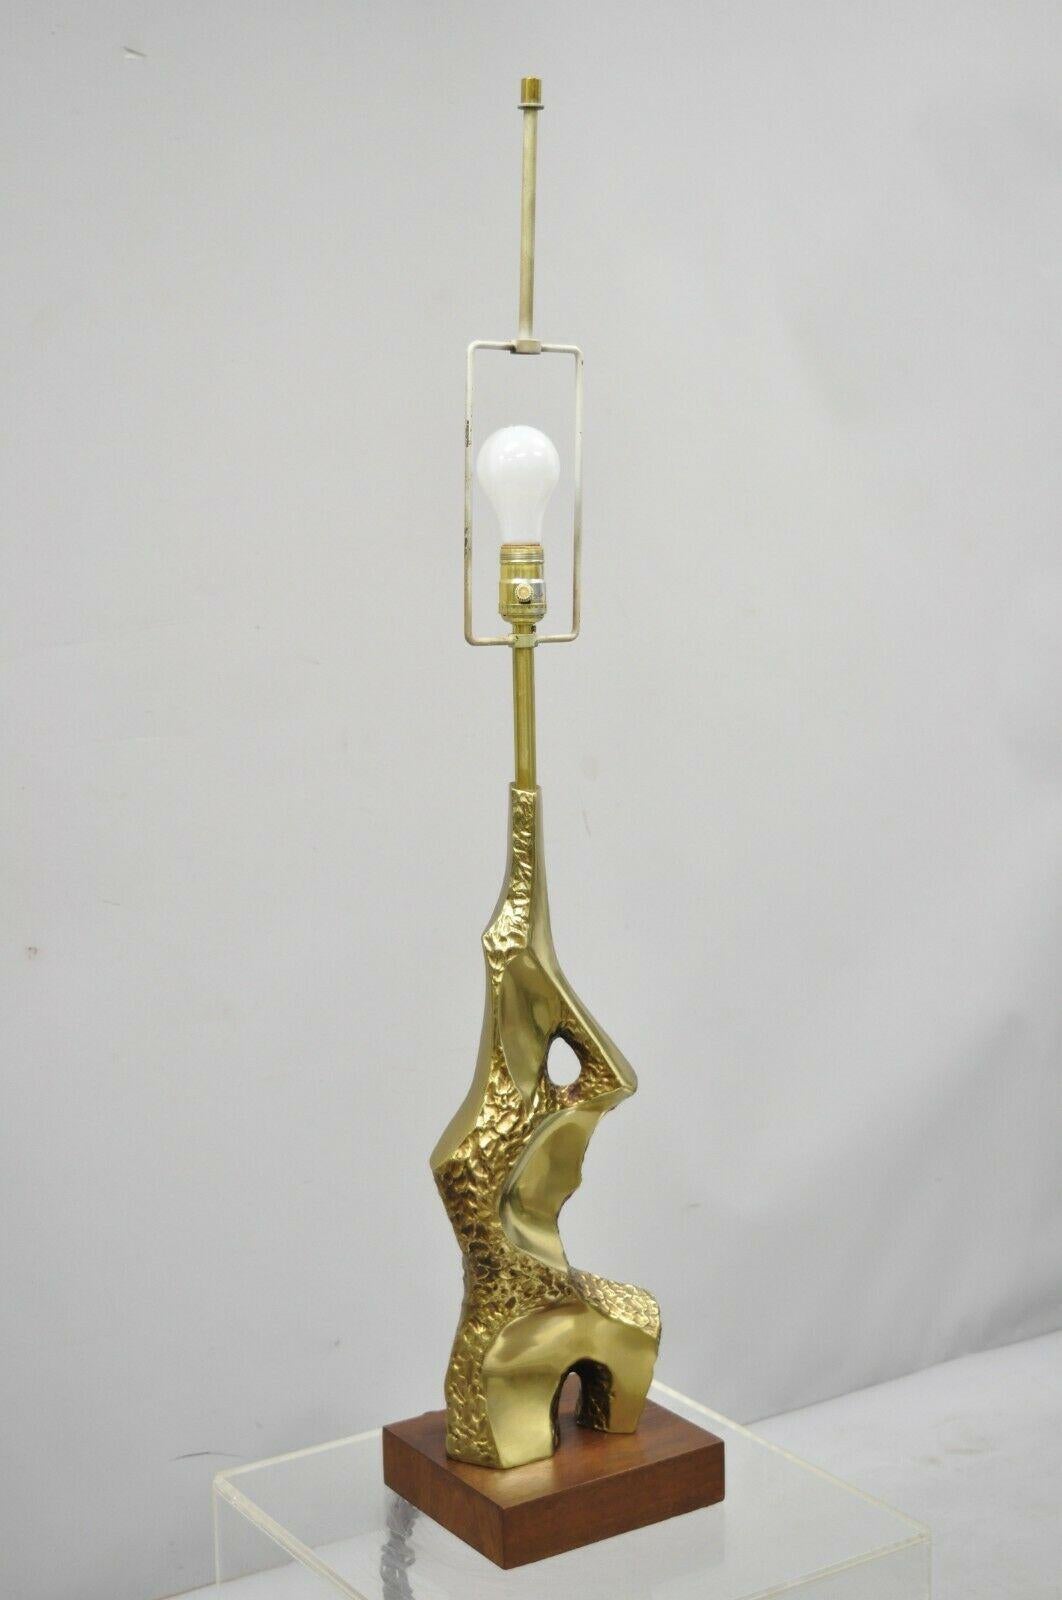 Vintage Laurel Maurizio Tempestini Brutalist brass midcentury table lamp. Item features original label, very nice vintage, sleek sculptural form, circa mid-20th century. Measurements: 41.5